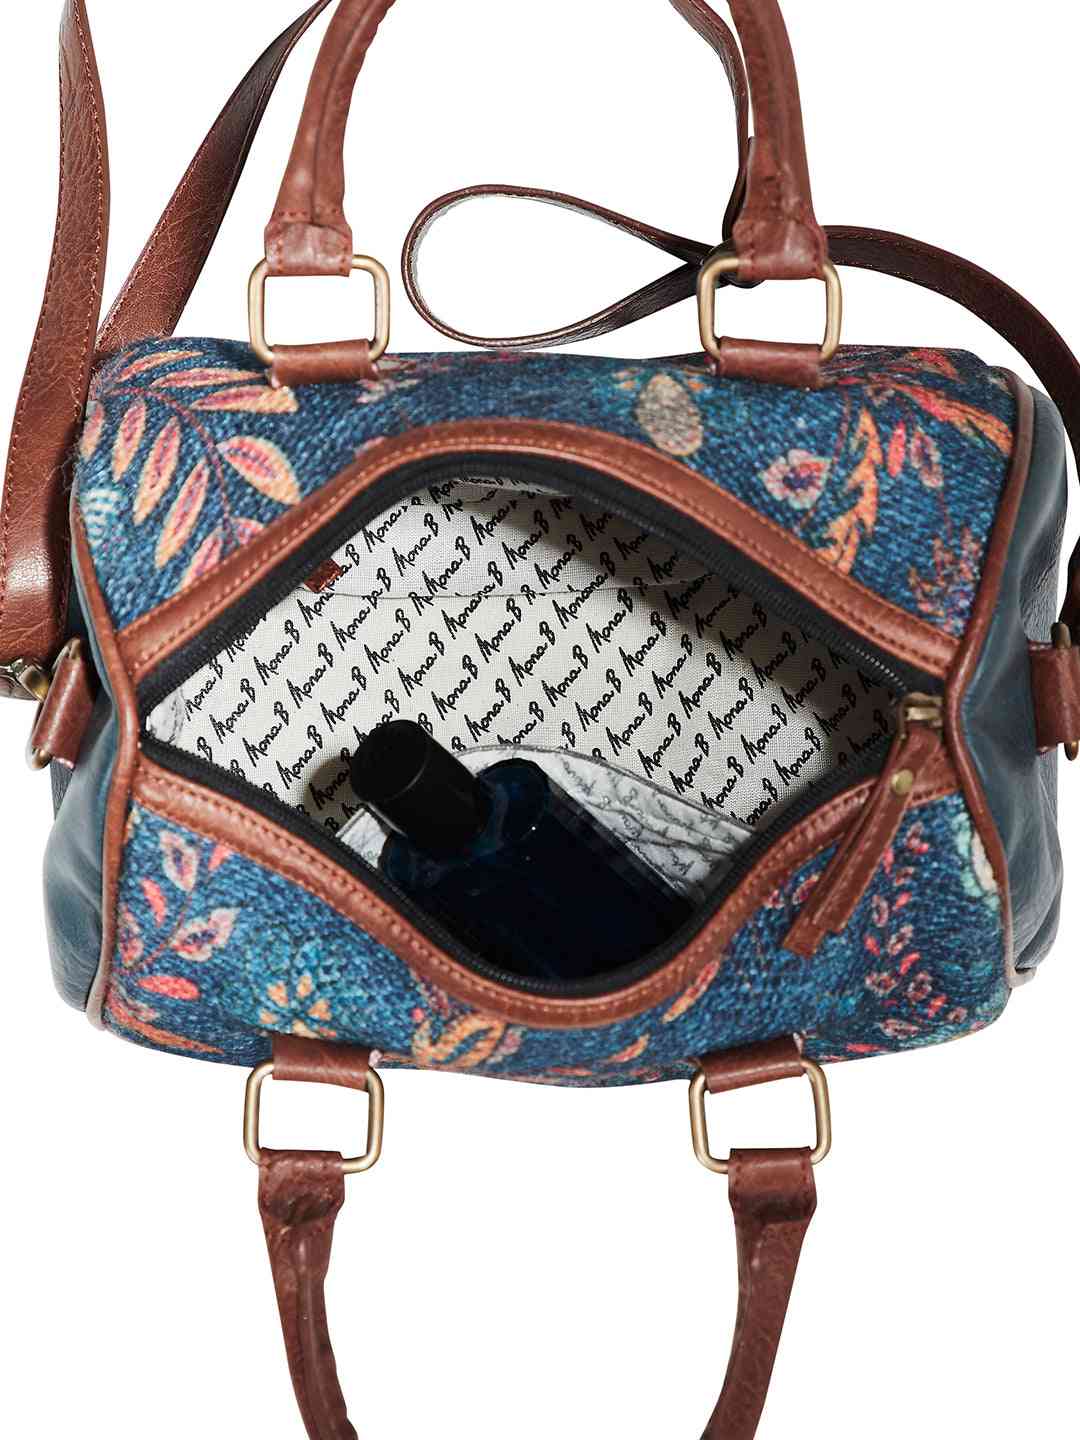 Mona-B Bag Mona B Canvas Small Vintage Handbag, Shoulder Bag, Crossbody Bag For Shopping, Travel With Stylish Design For Women (Blue, Kilim) - M-7004